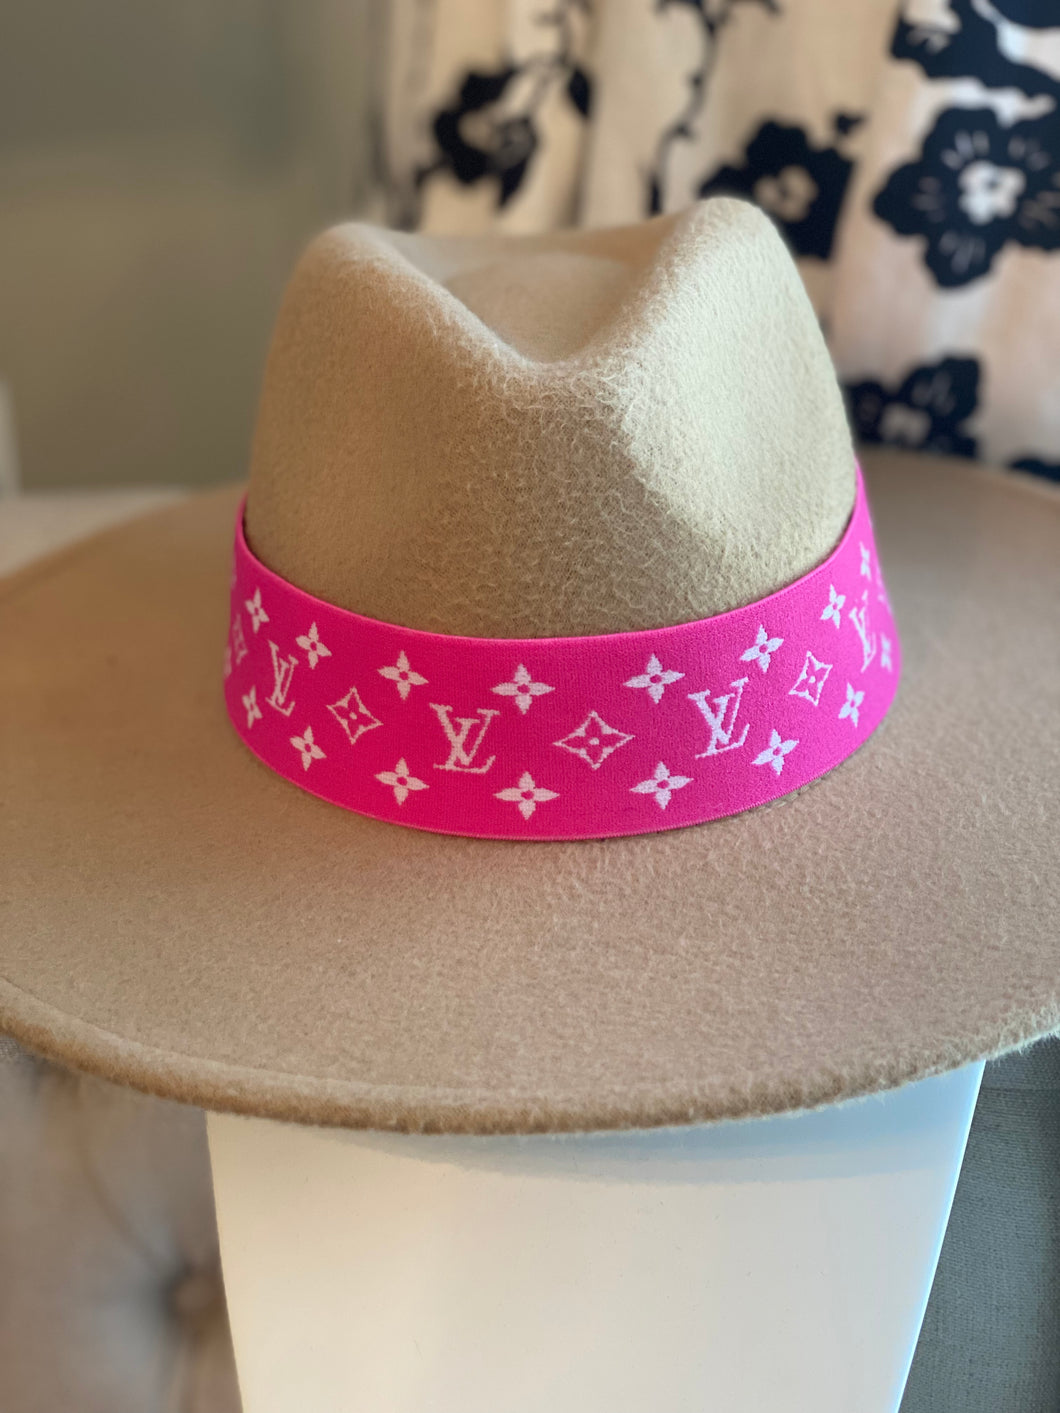 Hot Pink LV Hatband